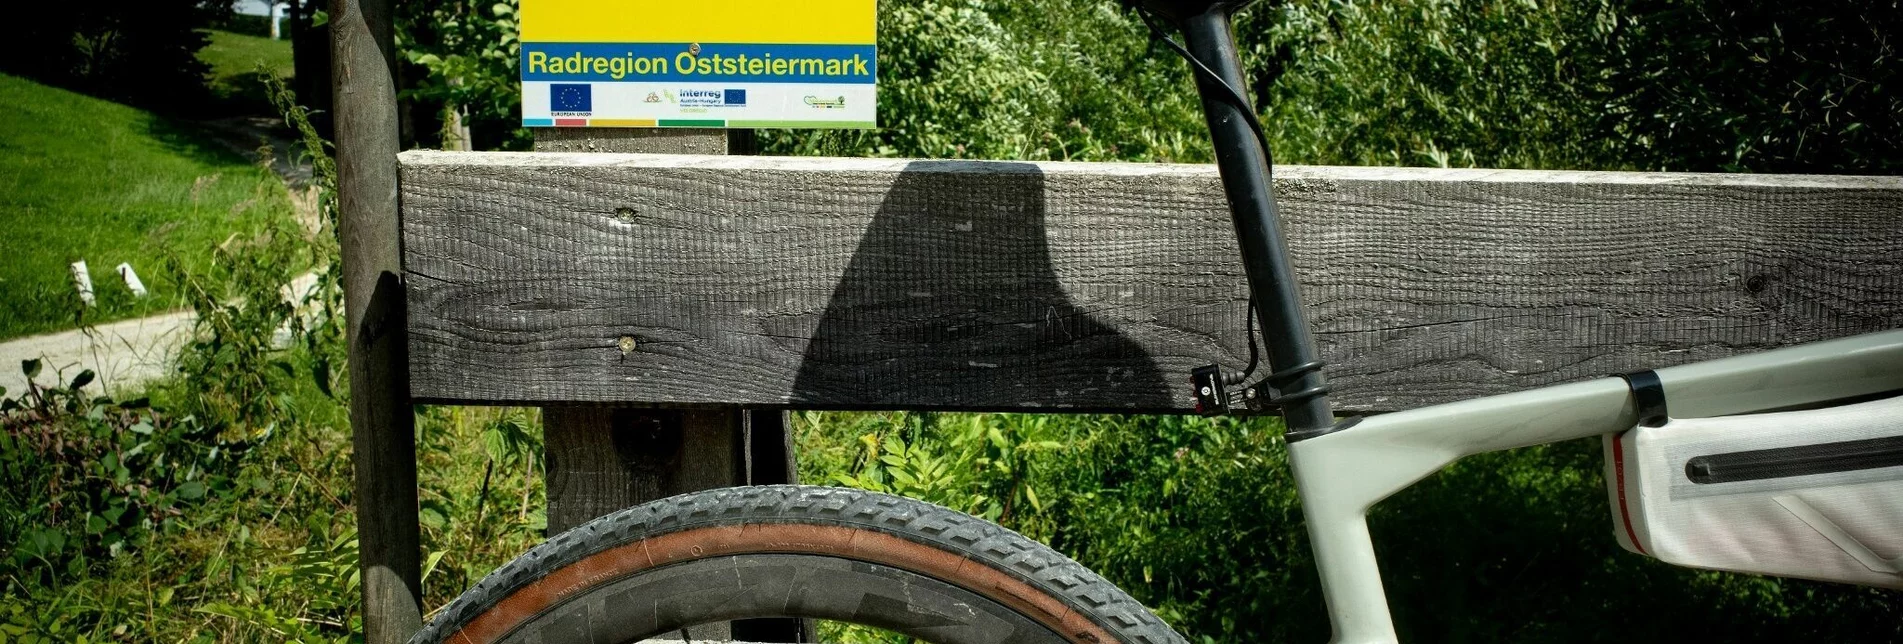 miscellaneousCyclingTour The Grand Jogl - Gravel Challenge - short version - Touren-Impression #1 | © Oststeiermark Tourismus